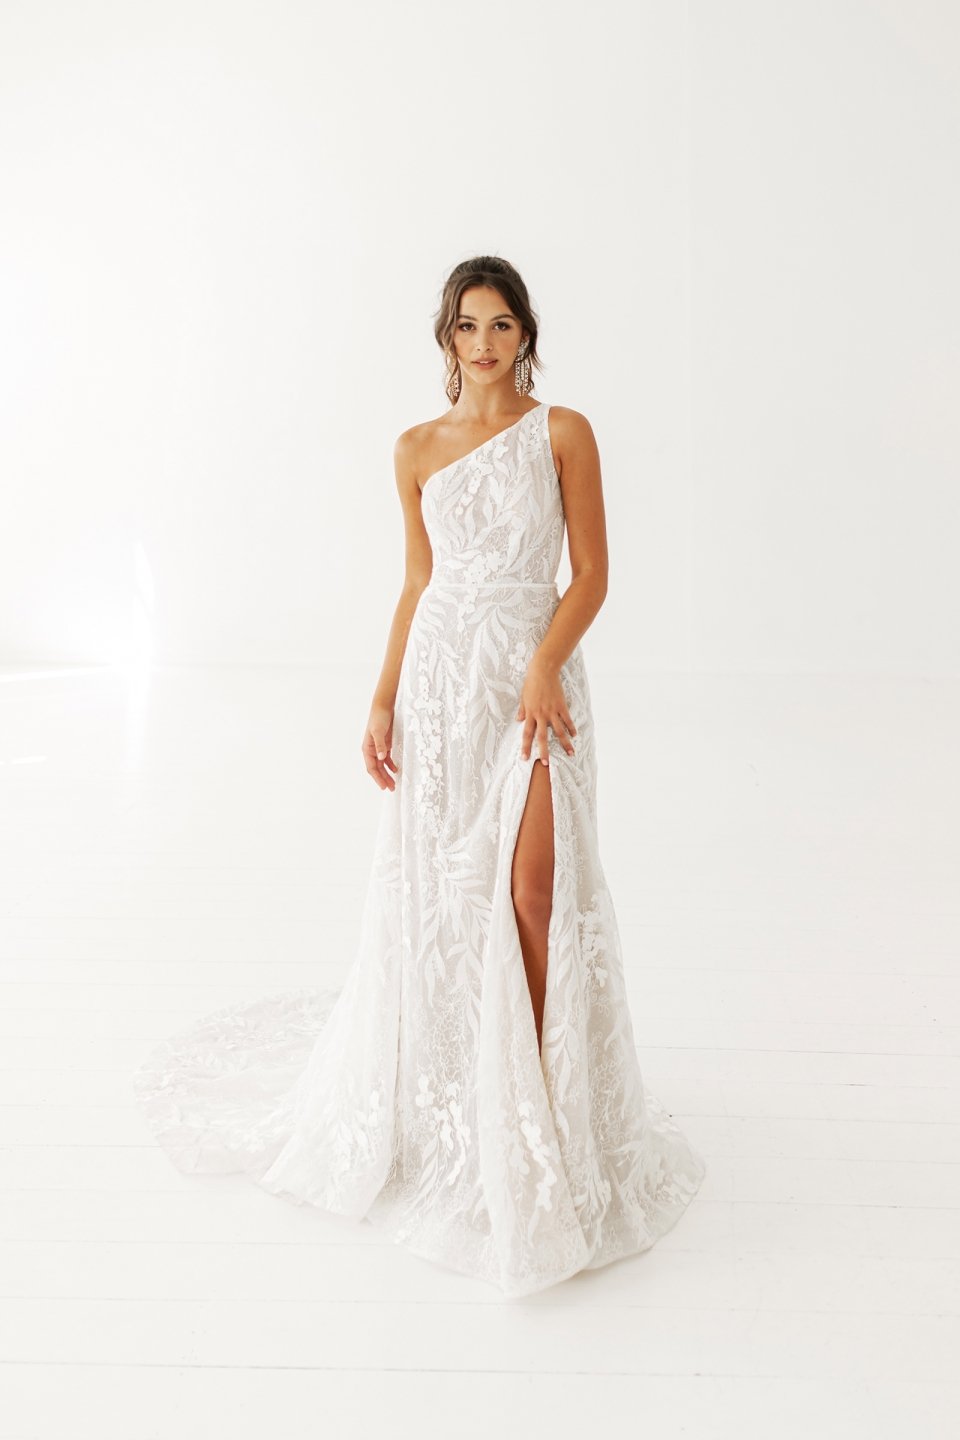 blanc-de-blanc-bridal-boutique-pittsburgh-cleveland-dress-wedding-gown-STARGAZER_Cheri-byOui.jpeg